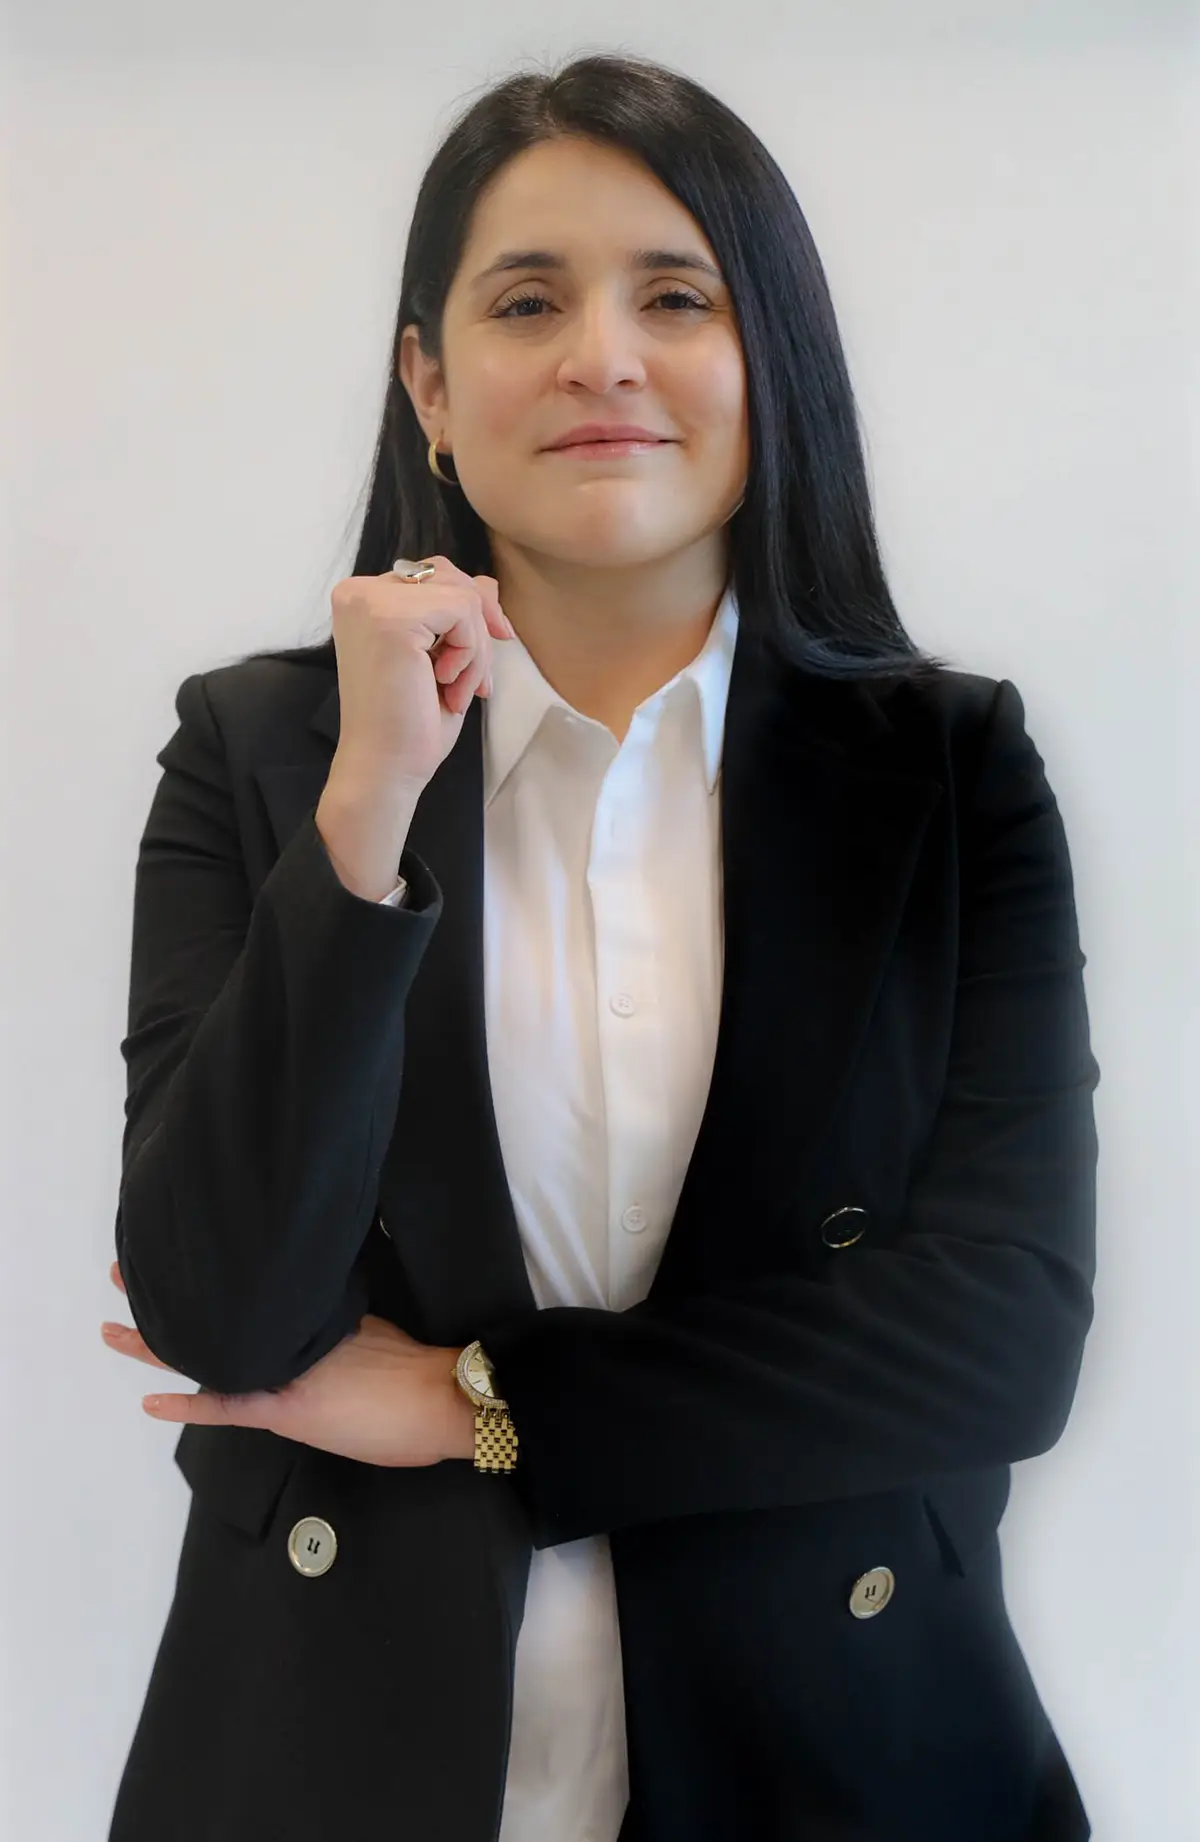 Maria Camila Garcia named new team's CEO